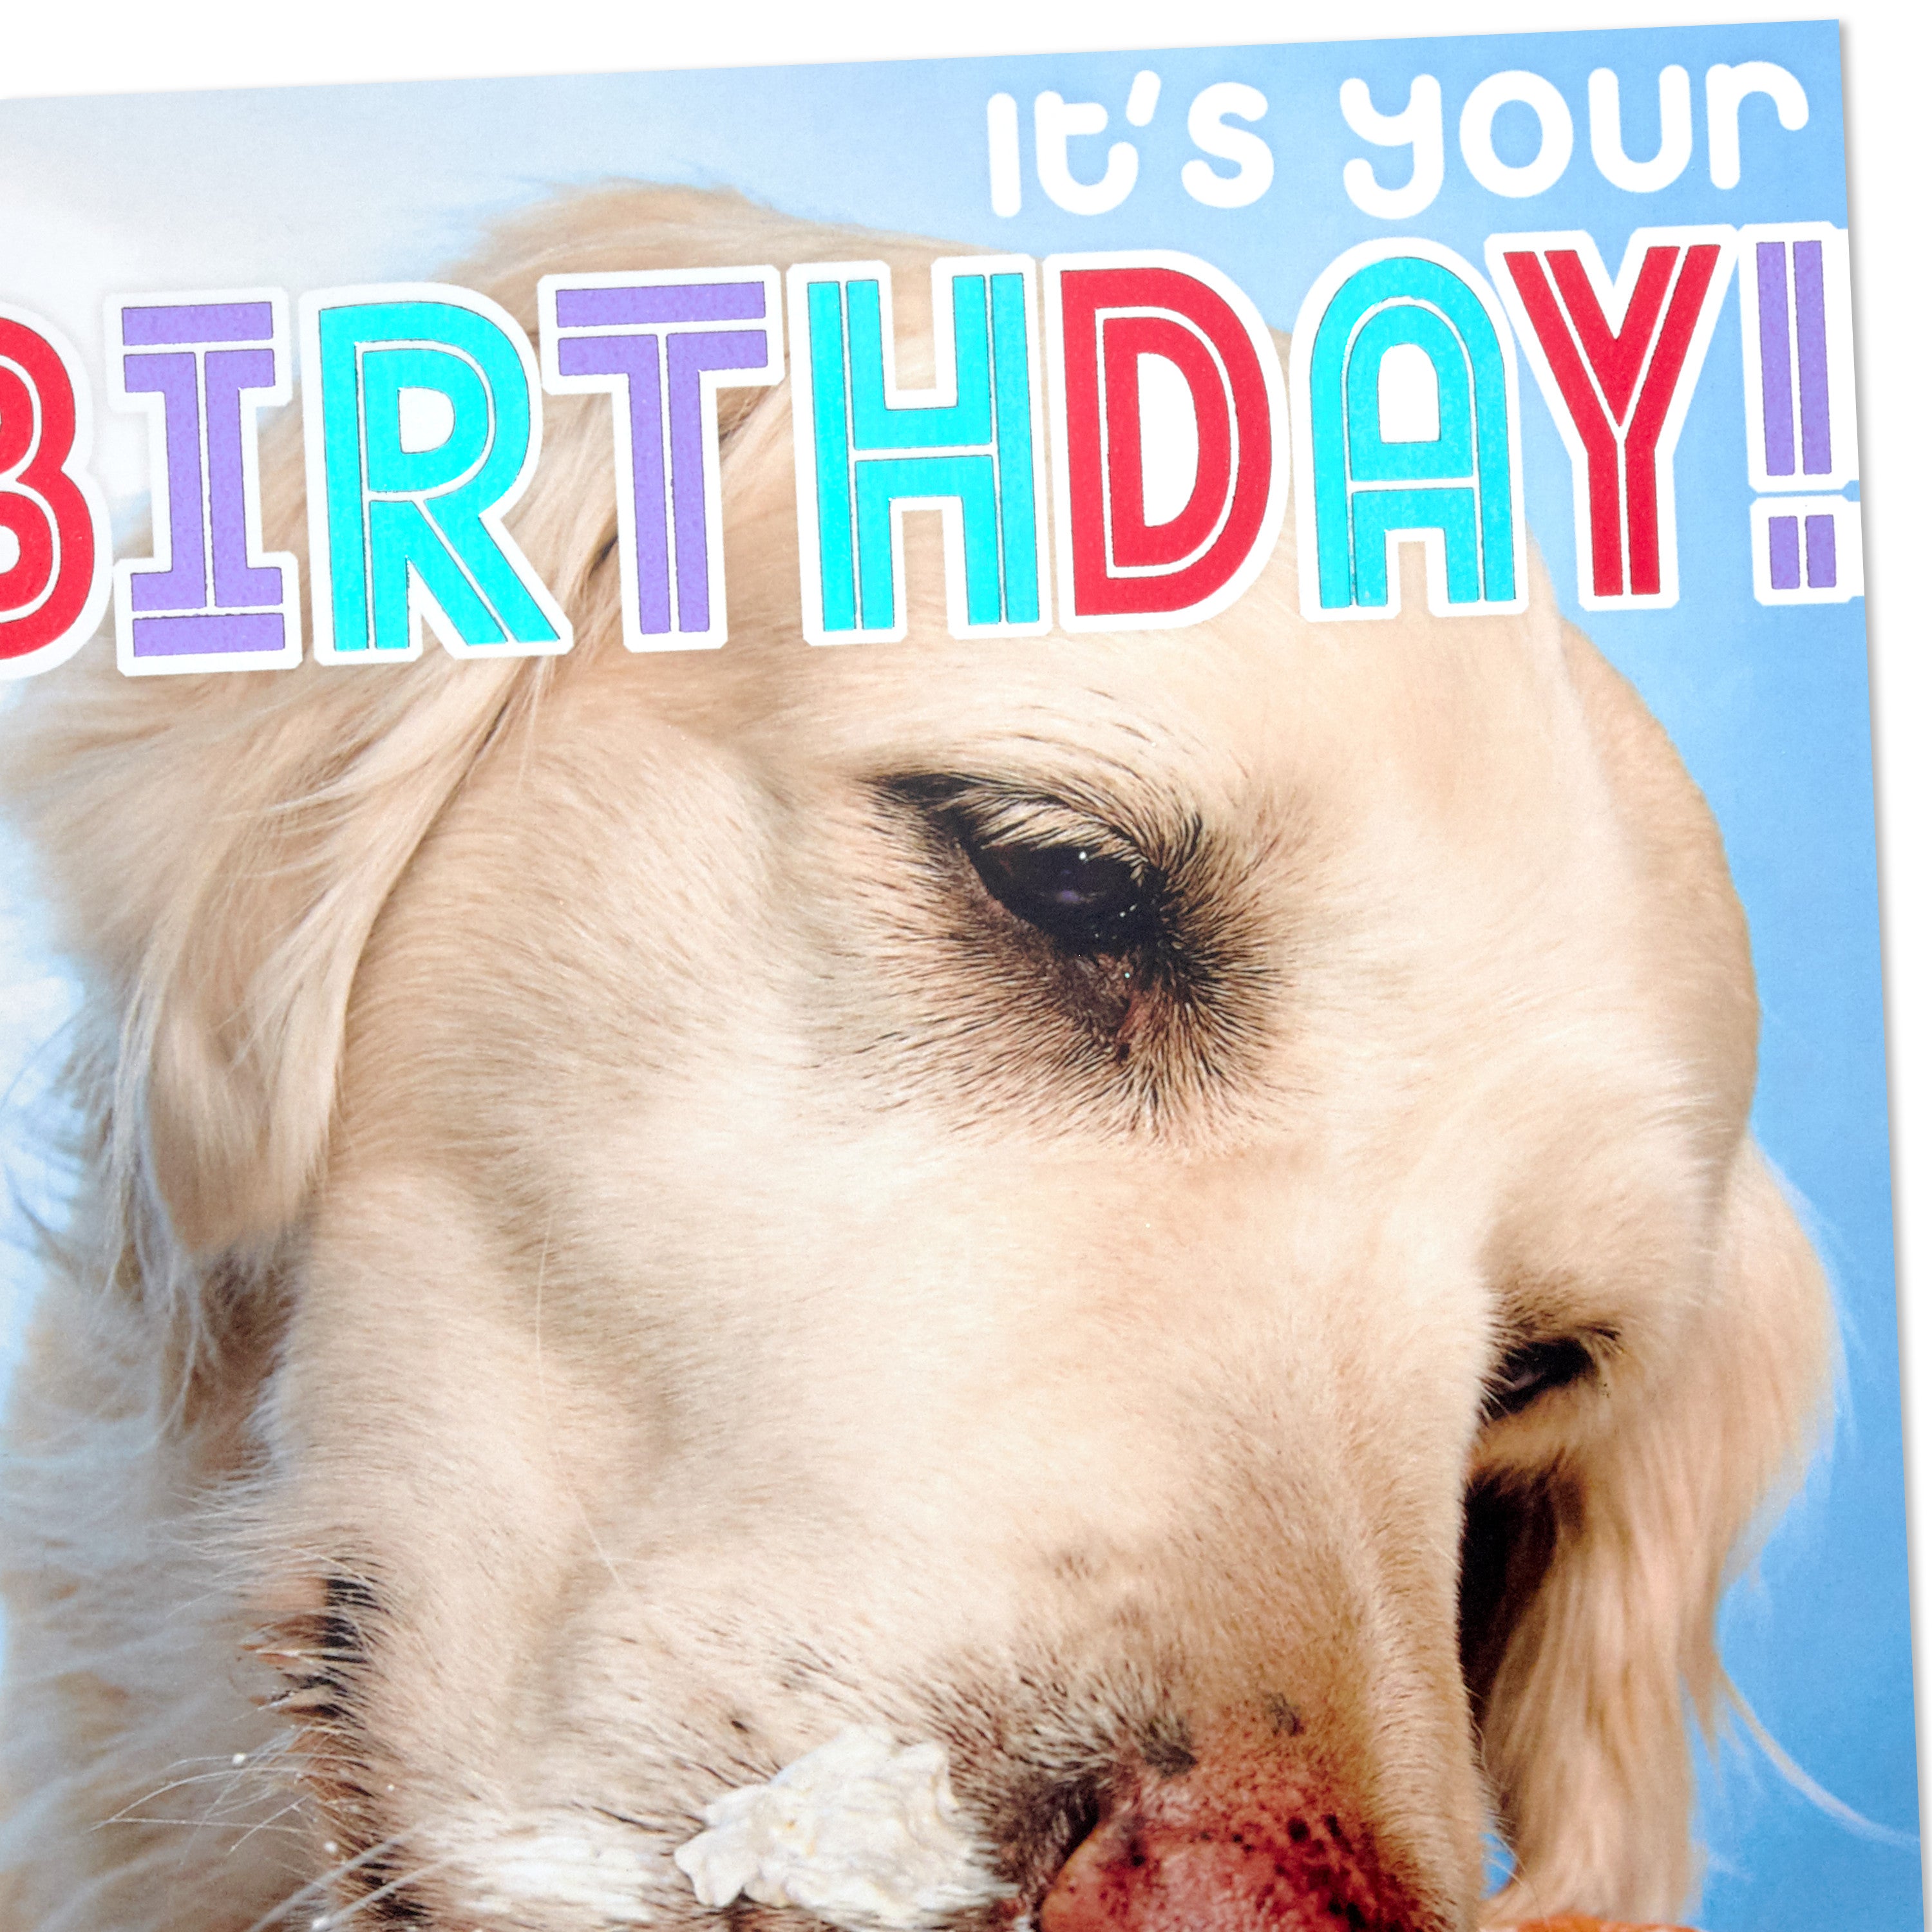  Birthday Card (Dog Eating Birthday Cake)